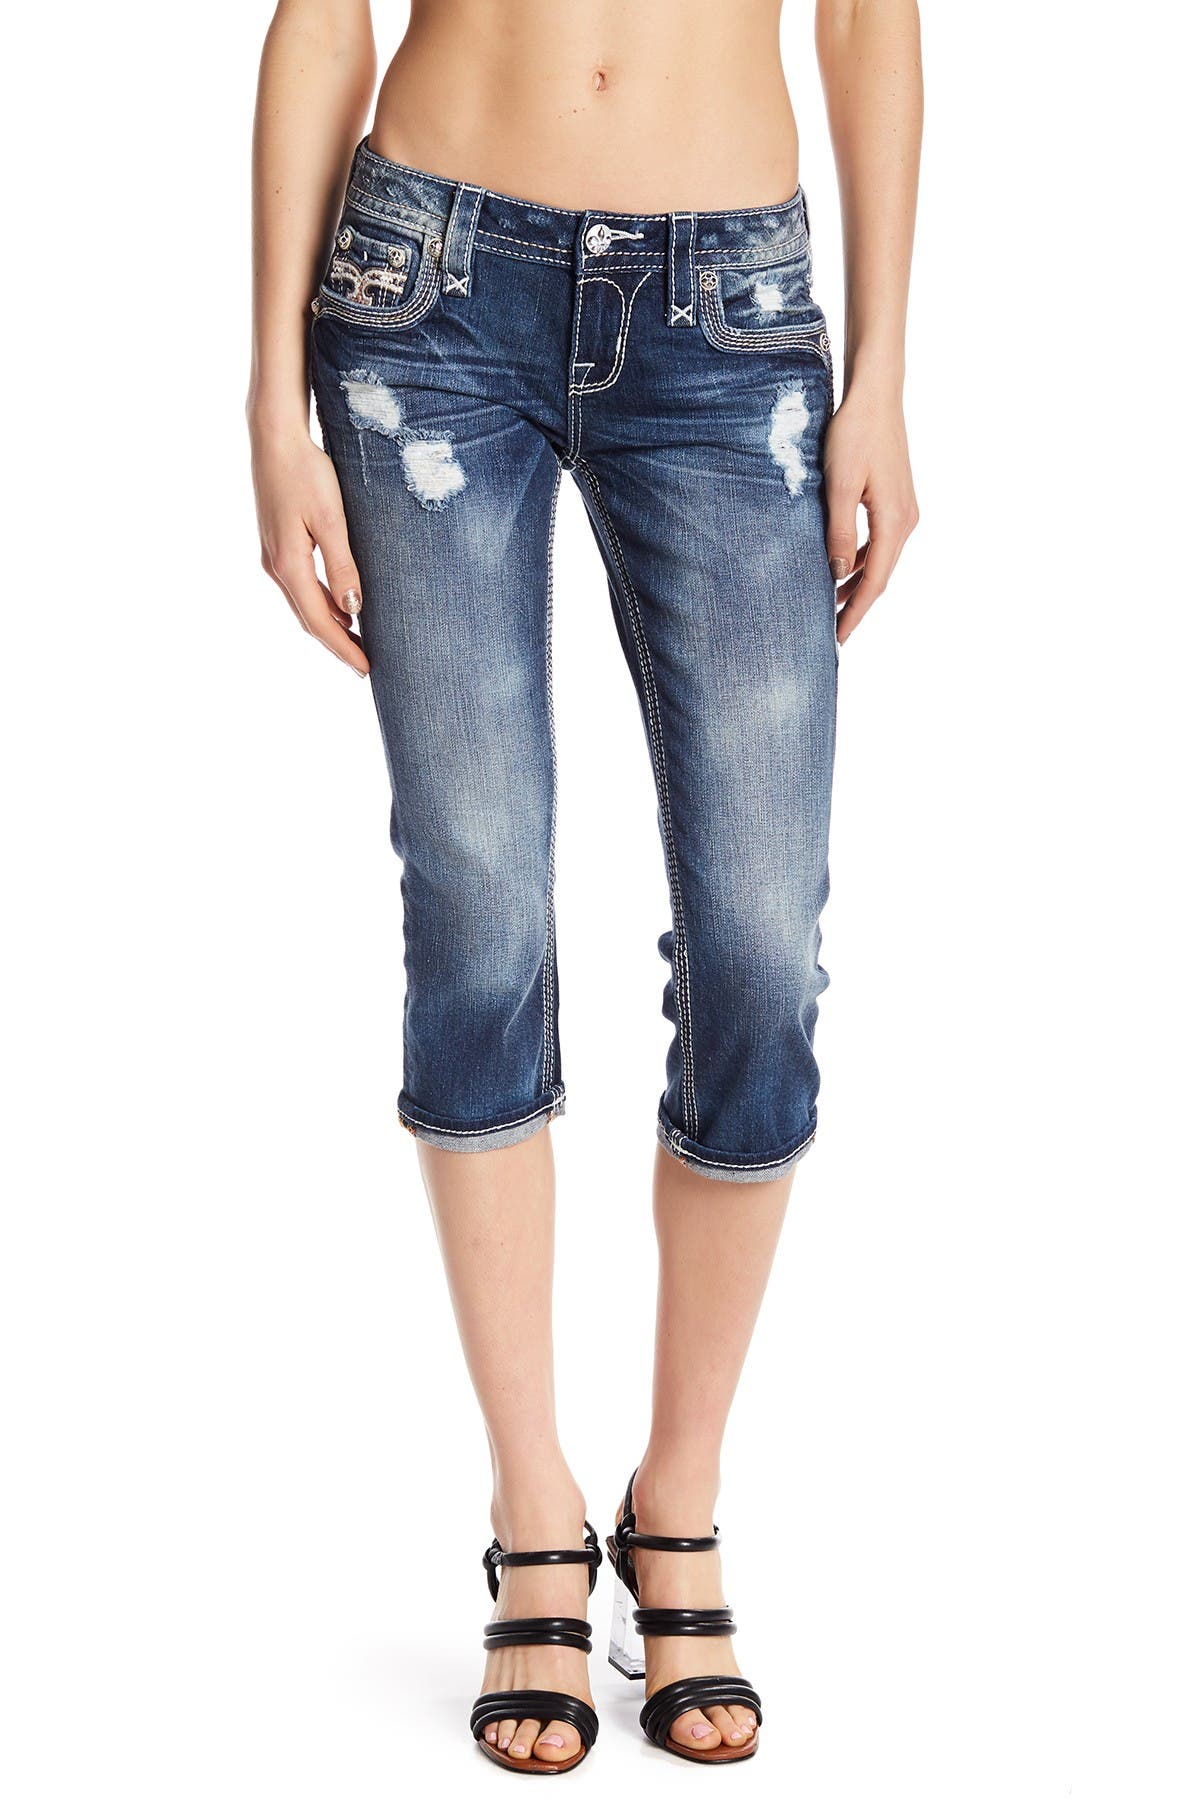 capri jeans